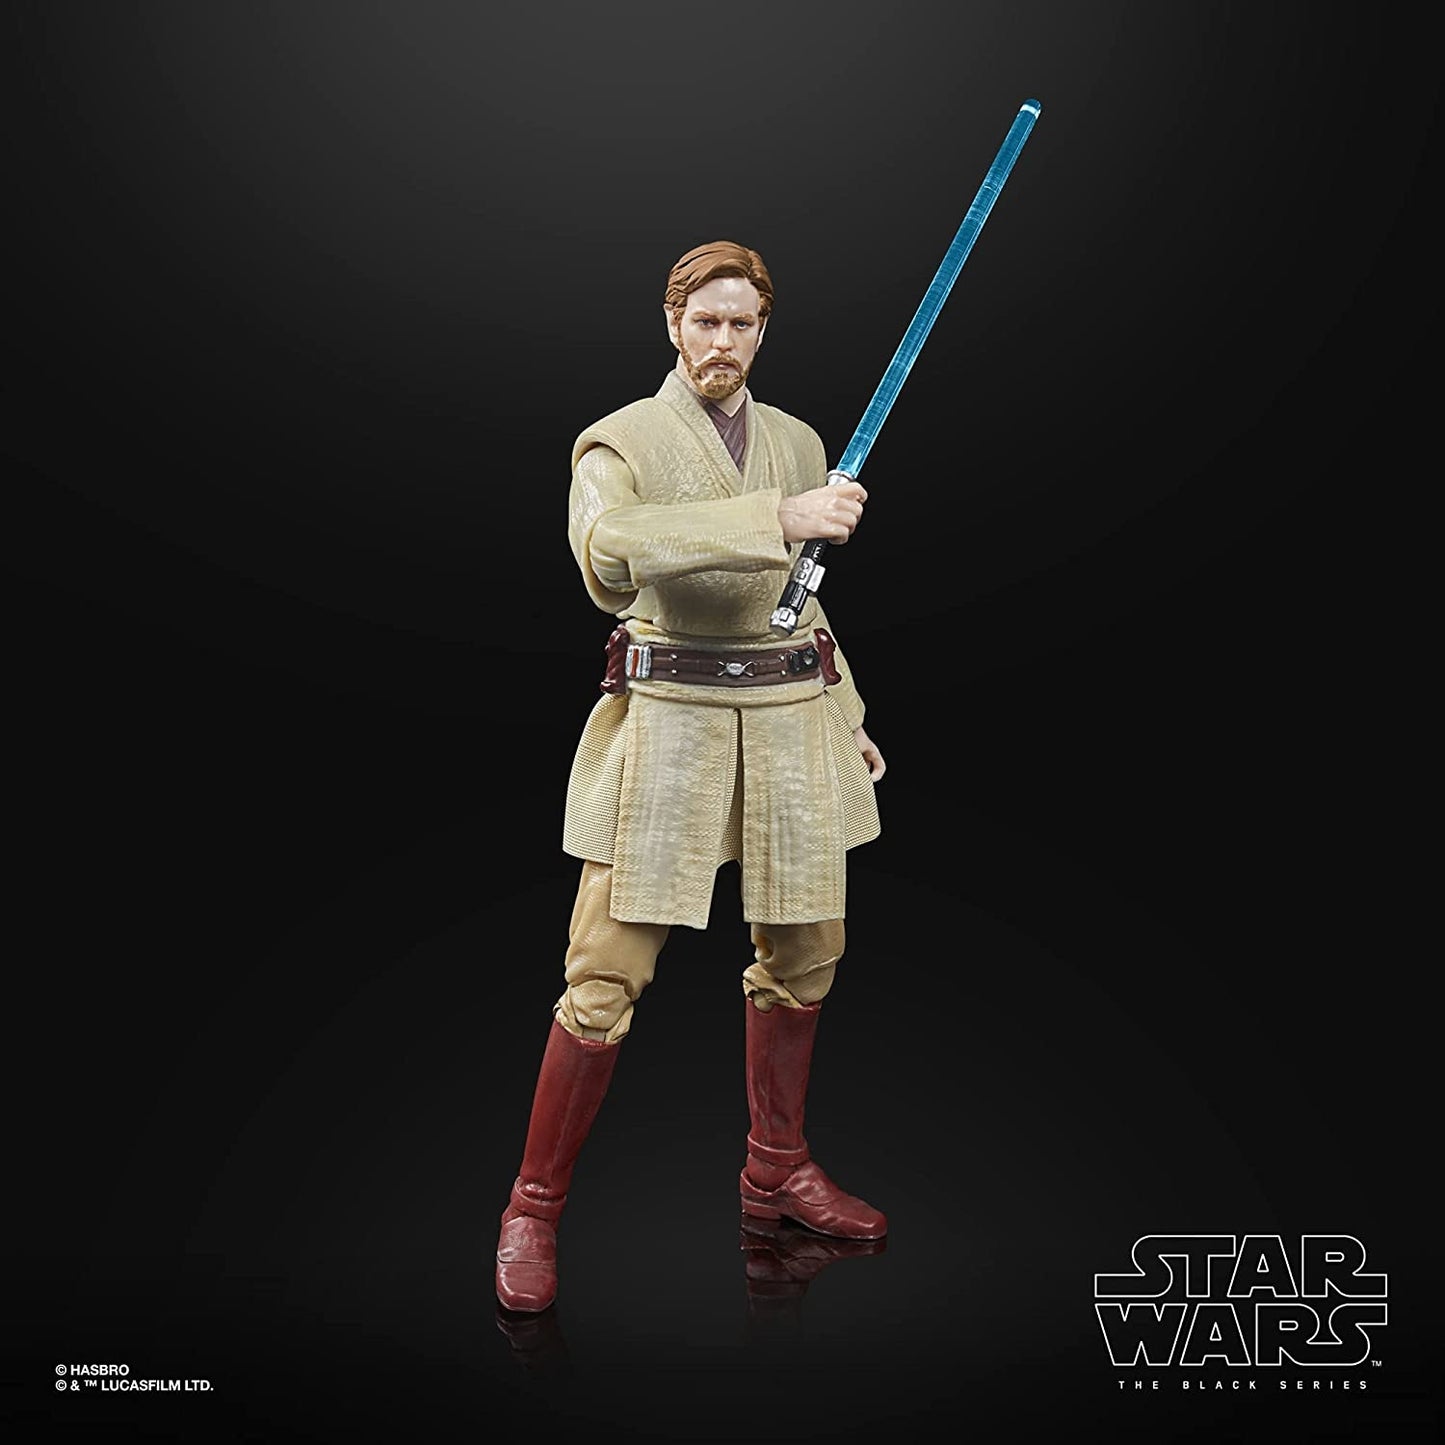 Star Wars Black Archives Obi-Wan Kenobi Episode III 6 Inch Figure